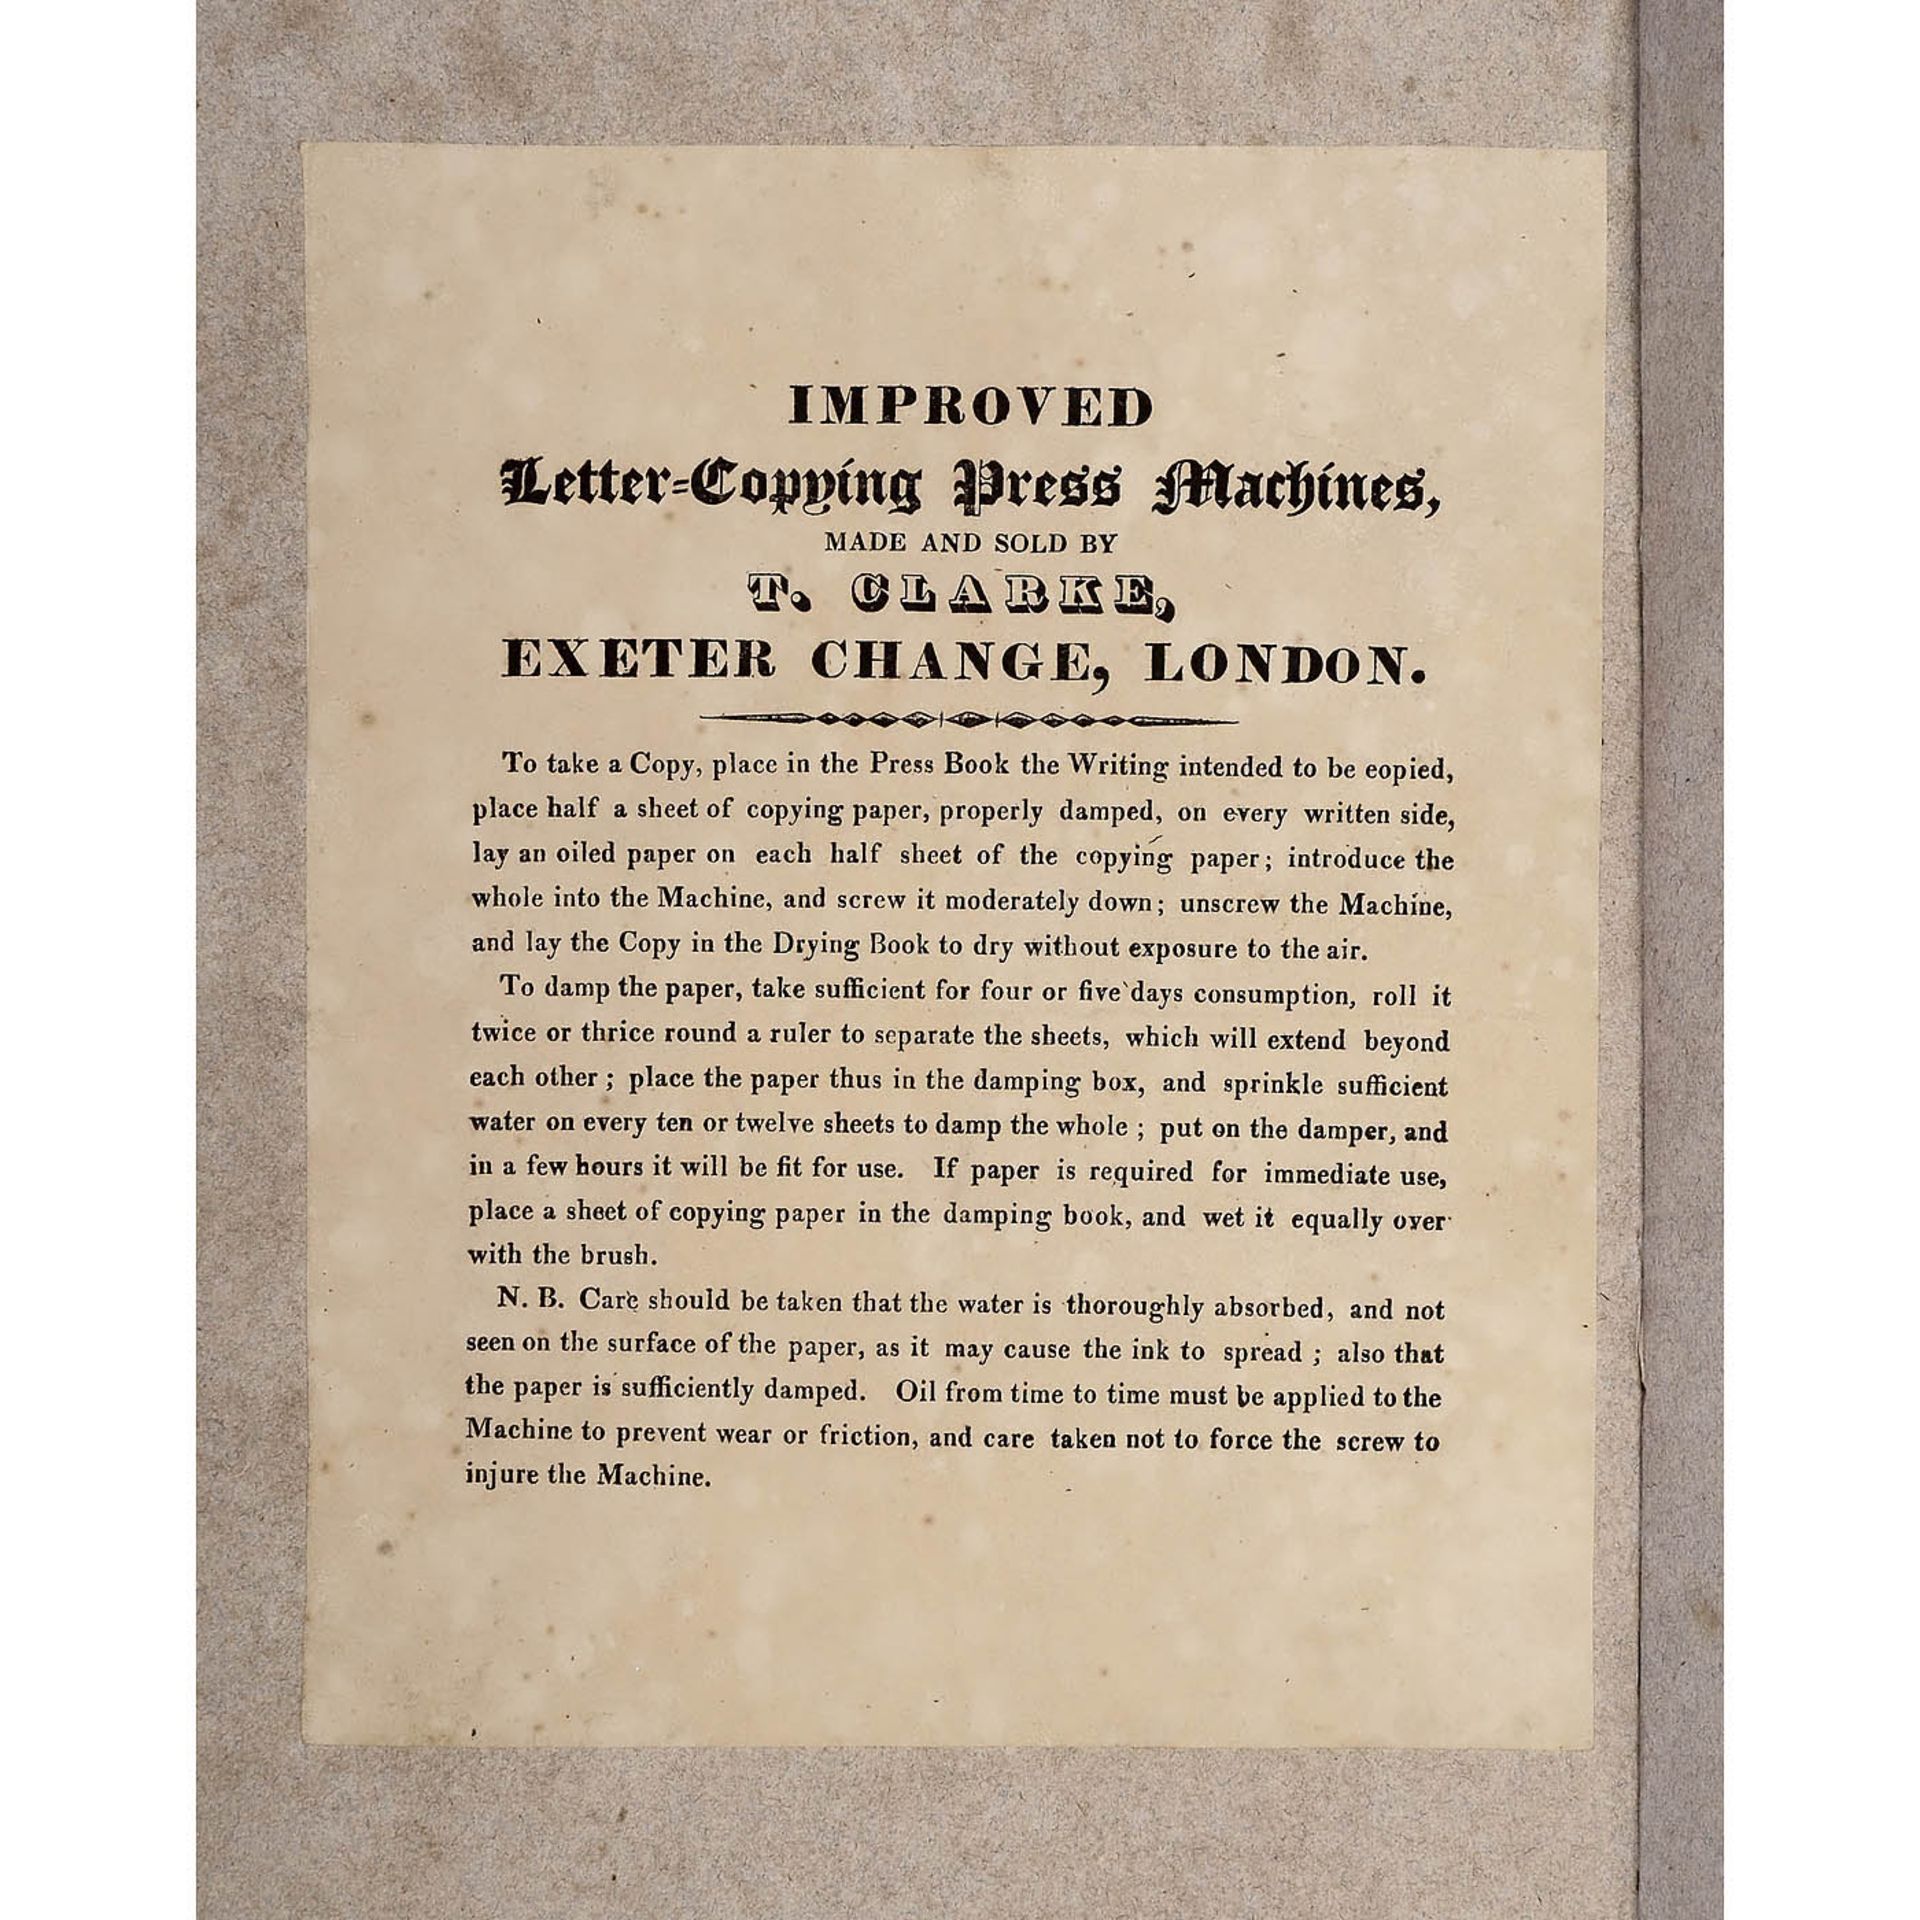 James Watt Letter-Copying Press, c. 1800 - Image 3 of 3